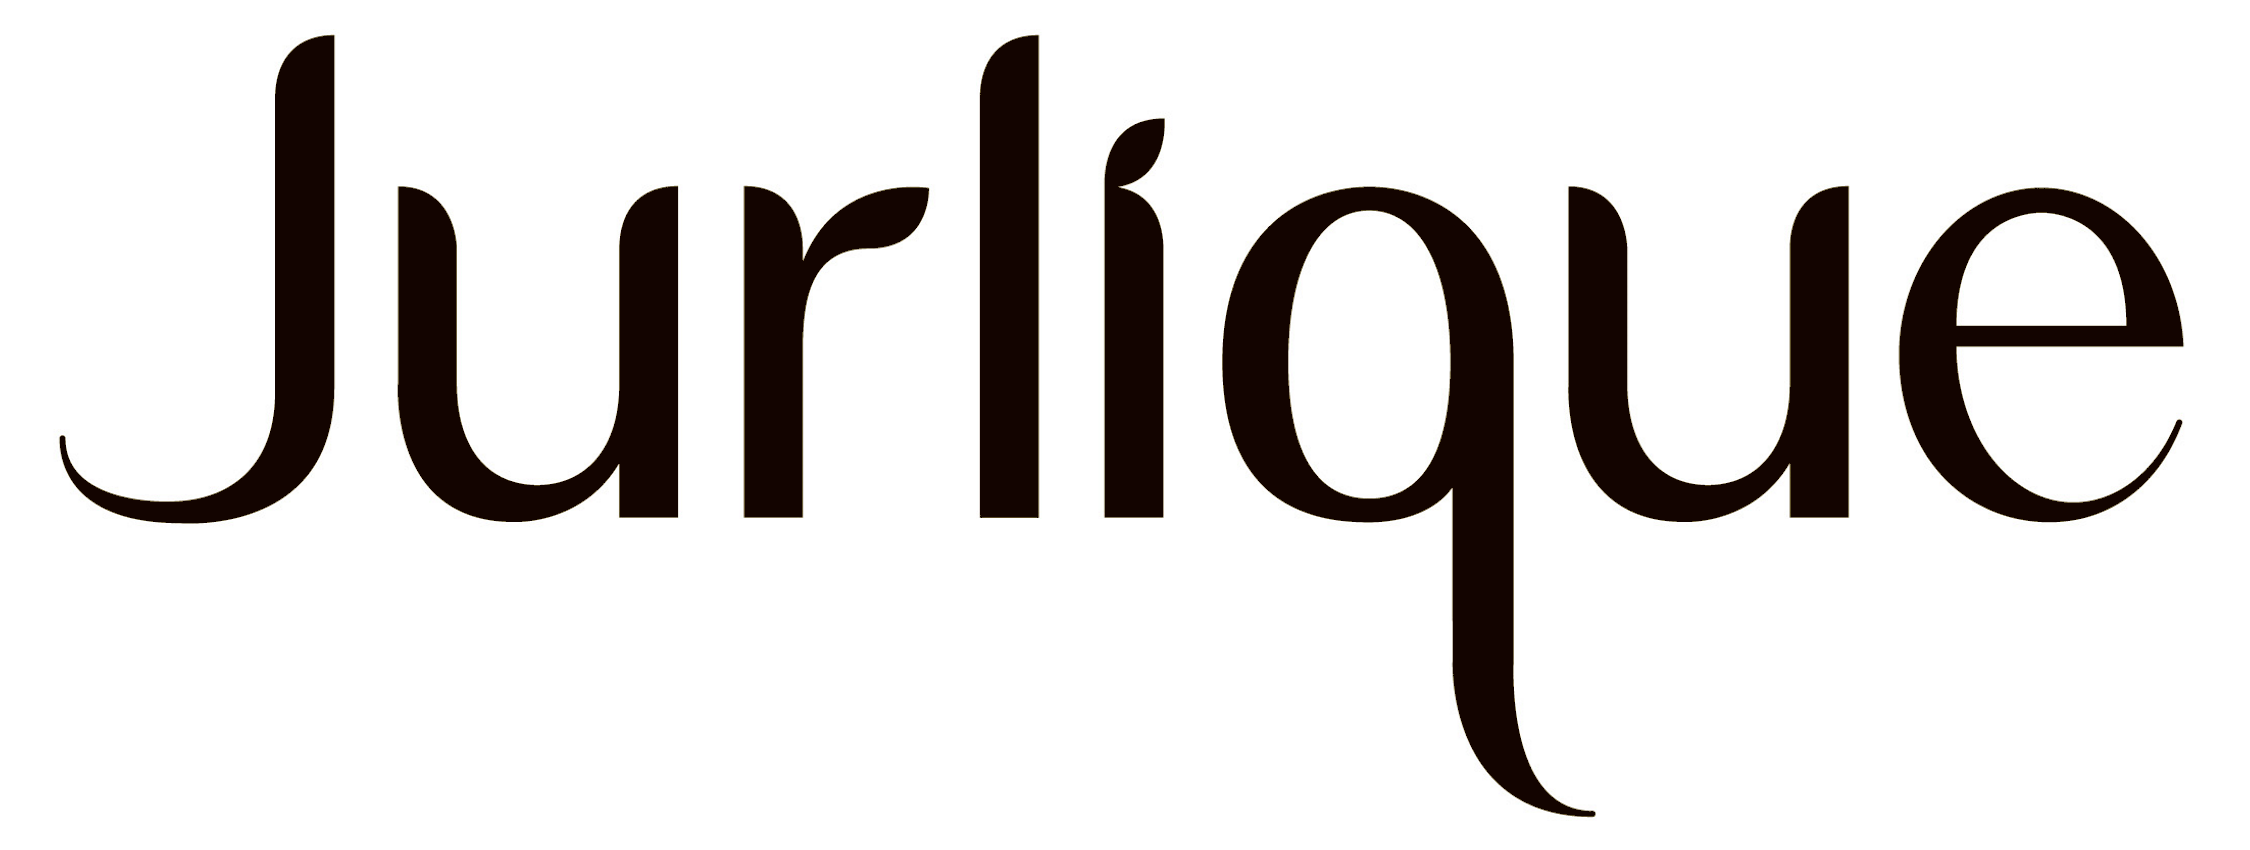 Jurlique_logo_wordmark.png